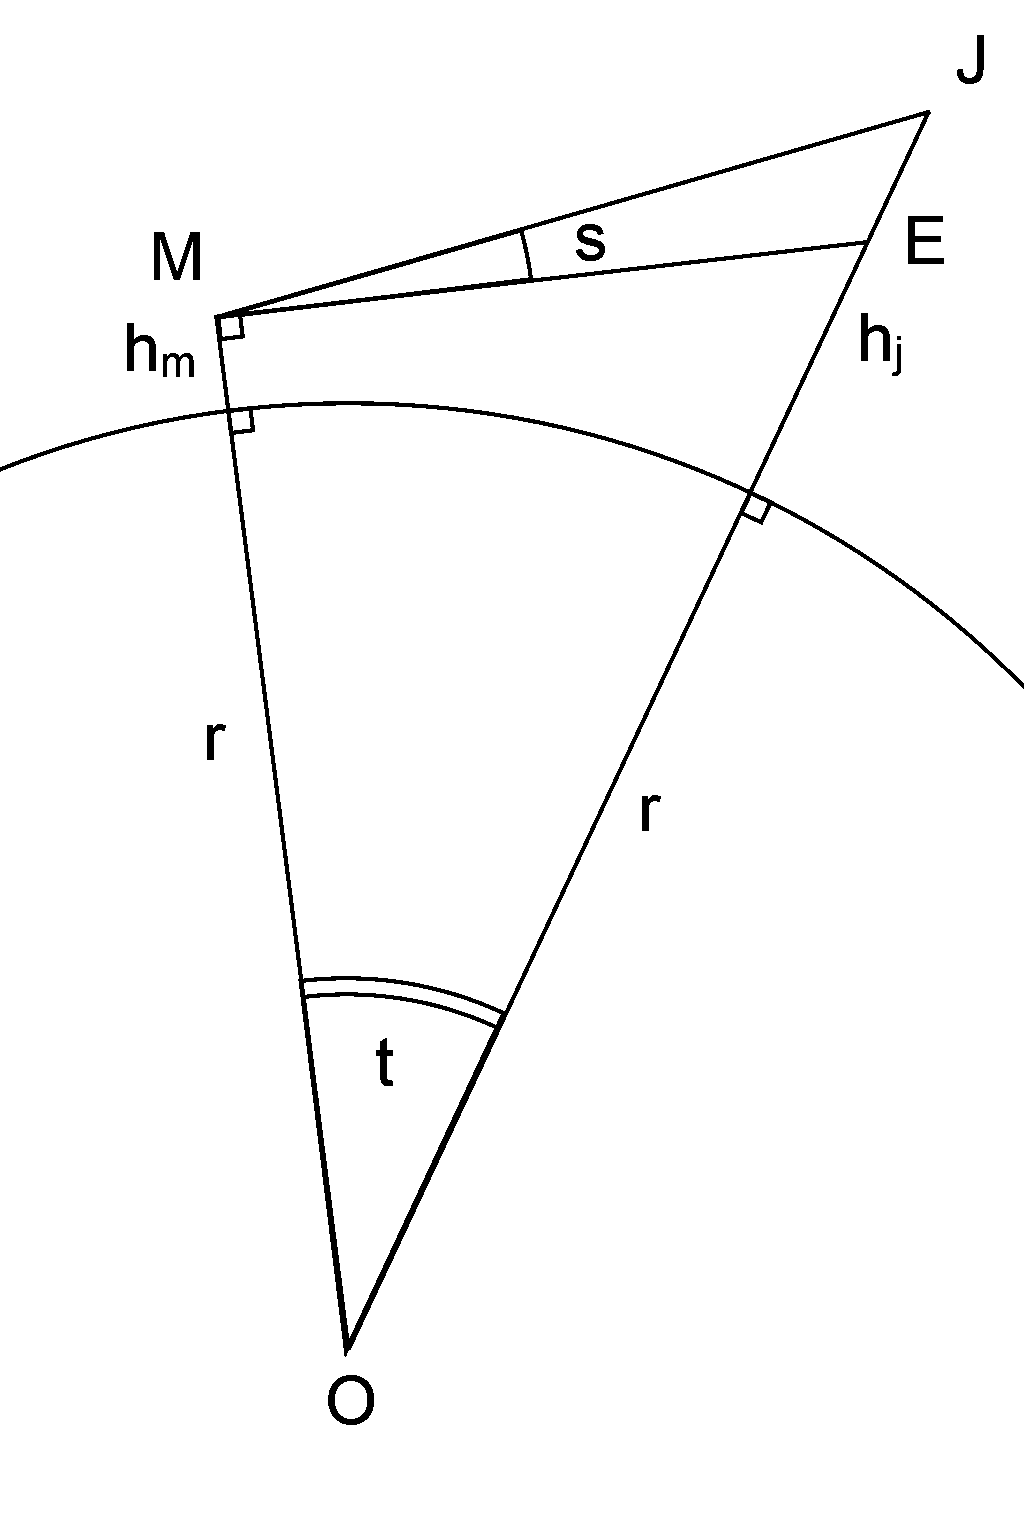 Diagram showing eye level position.